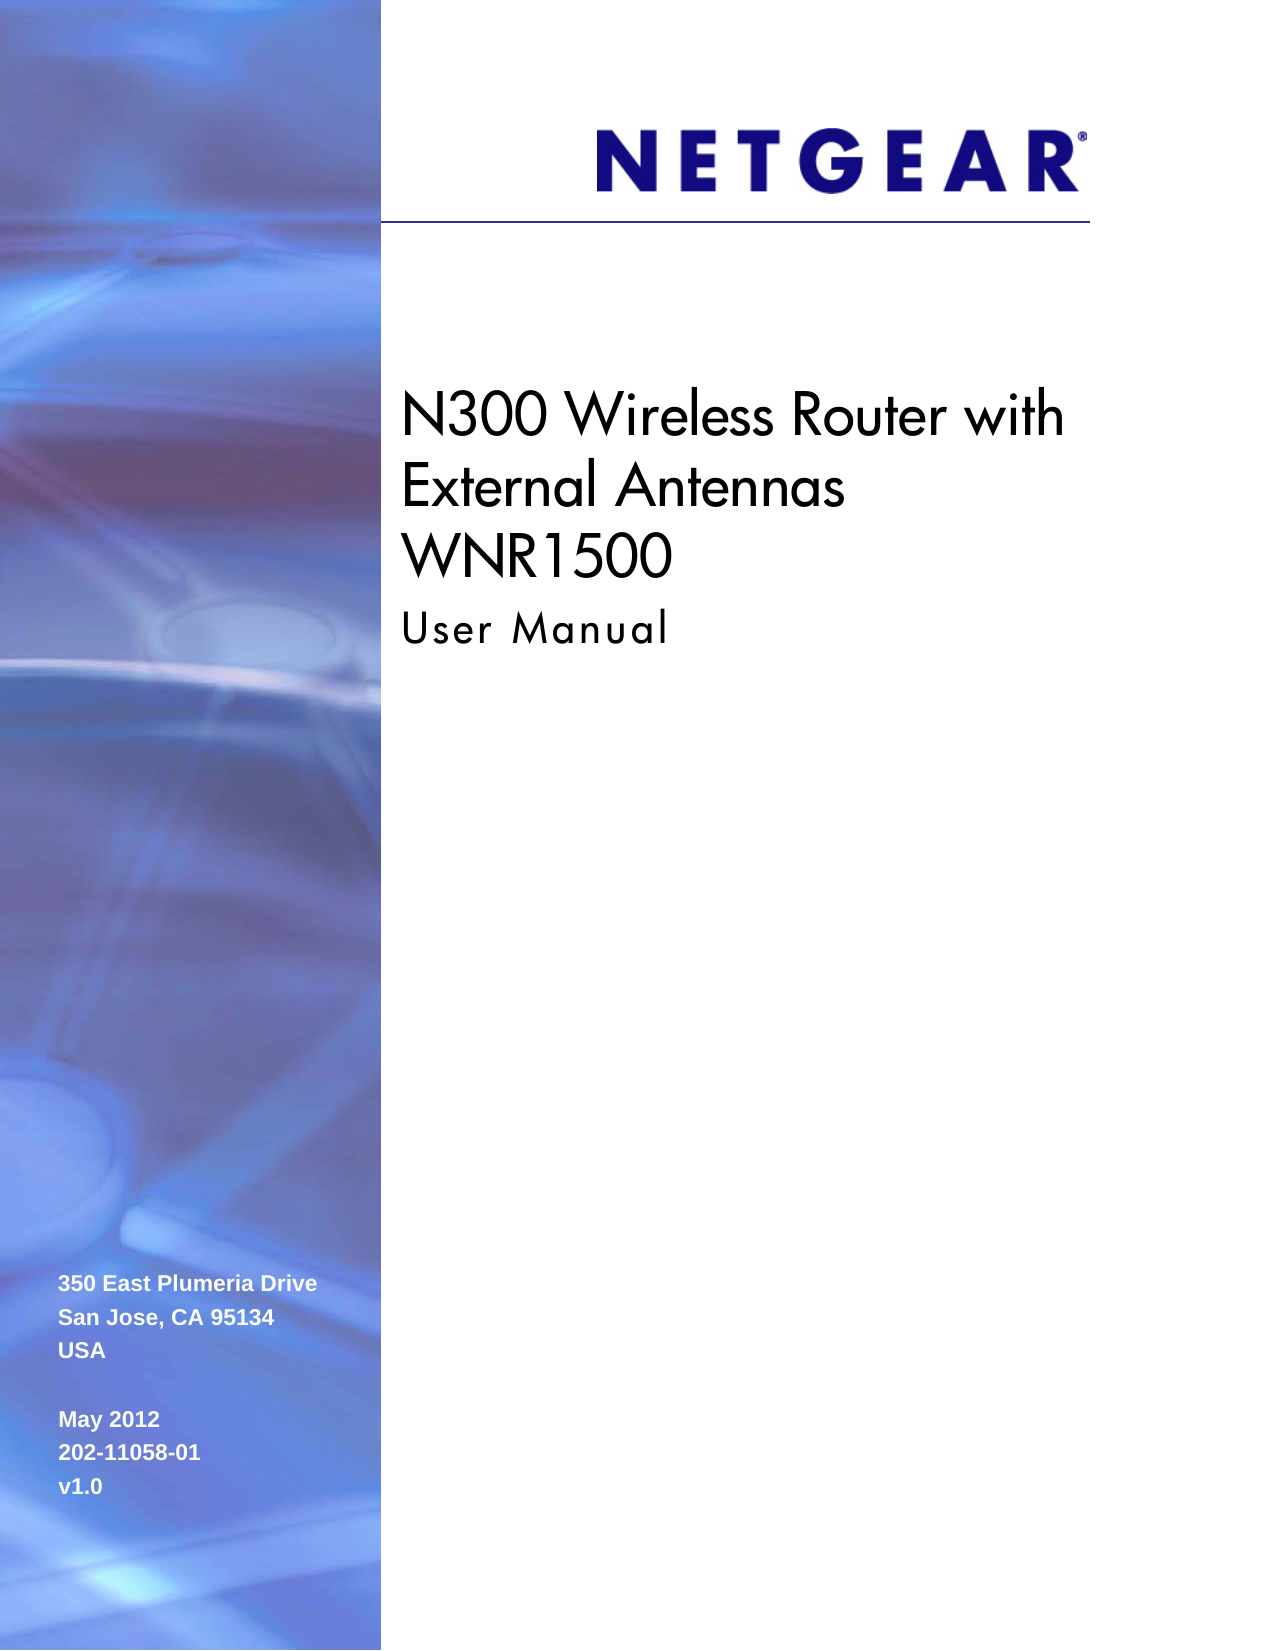 350 East Plumeria DriveSan Jose, CA 95134USAMay 2012202-11058-01v1.0N300 Wireless Router with External Antennas WNR1500User Manual